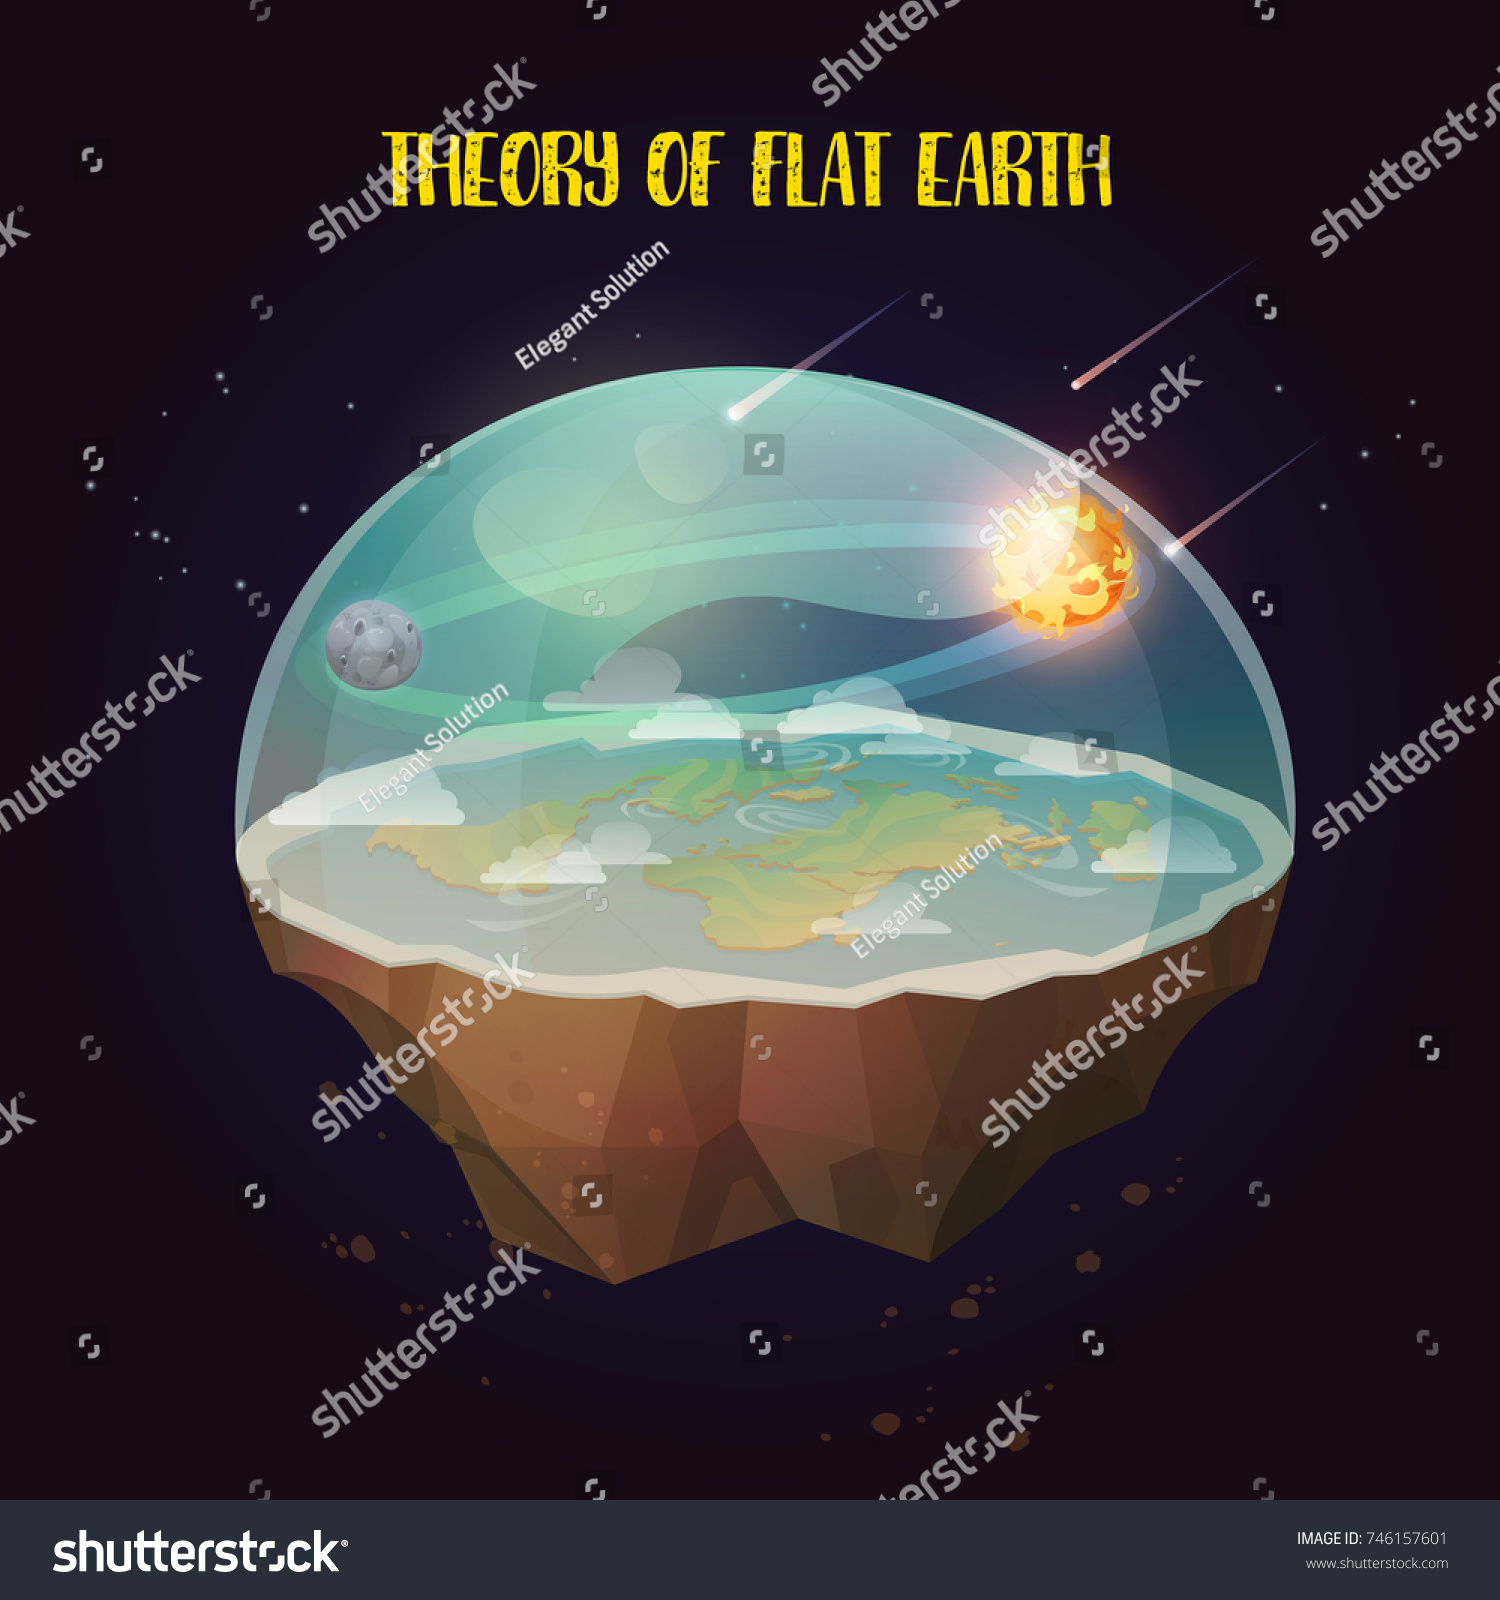 flat earth moon and sun